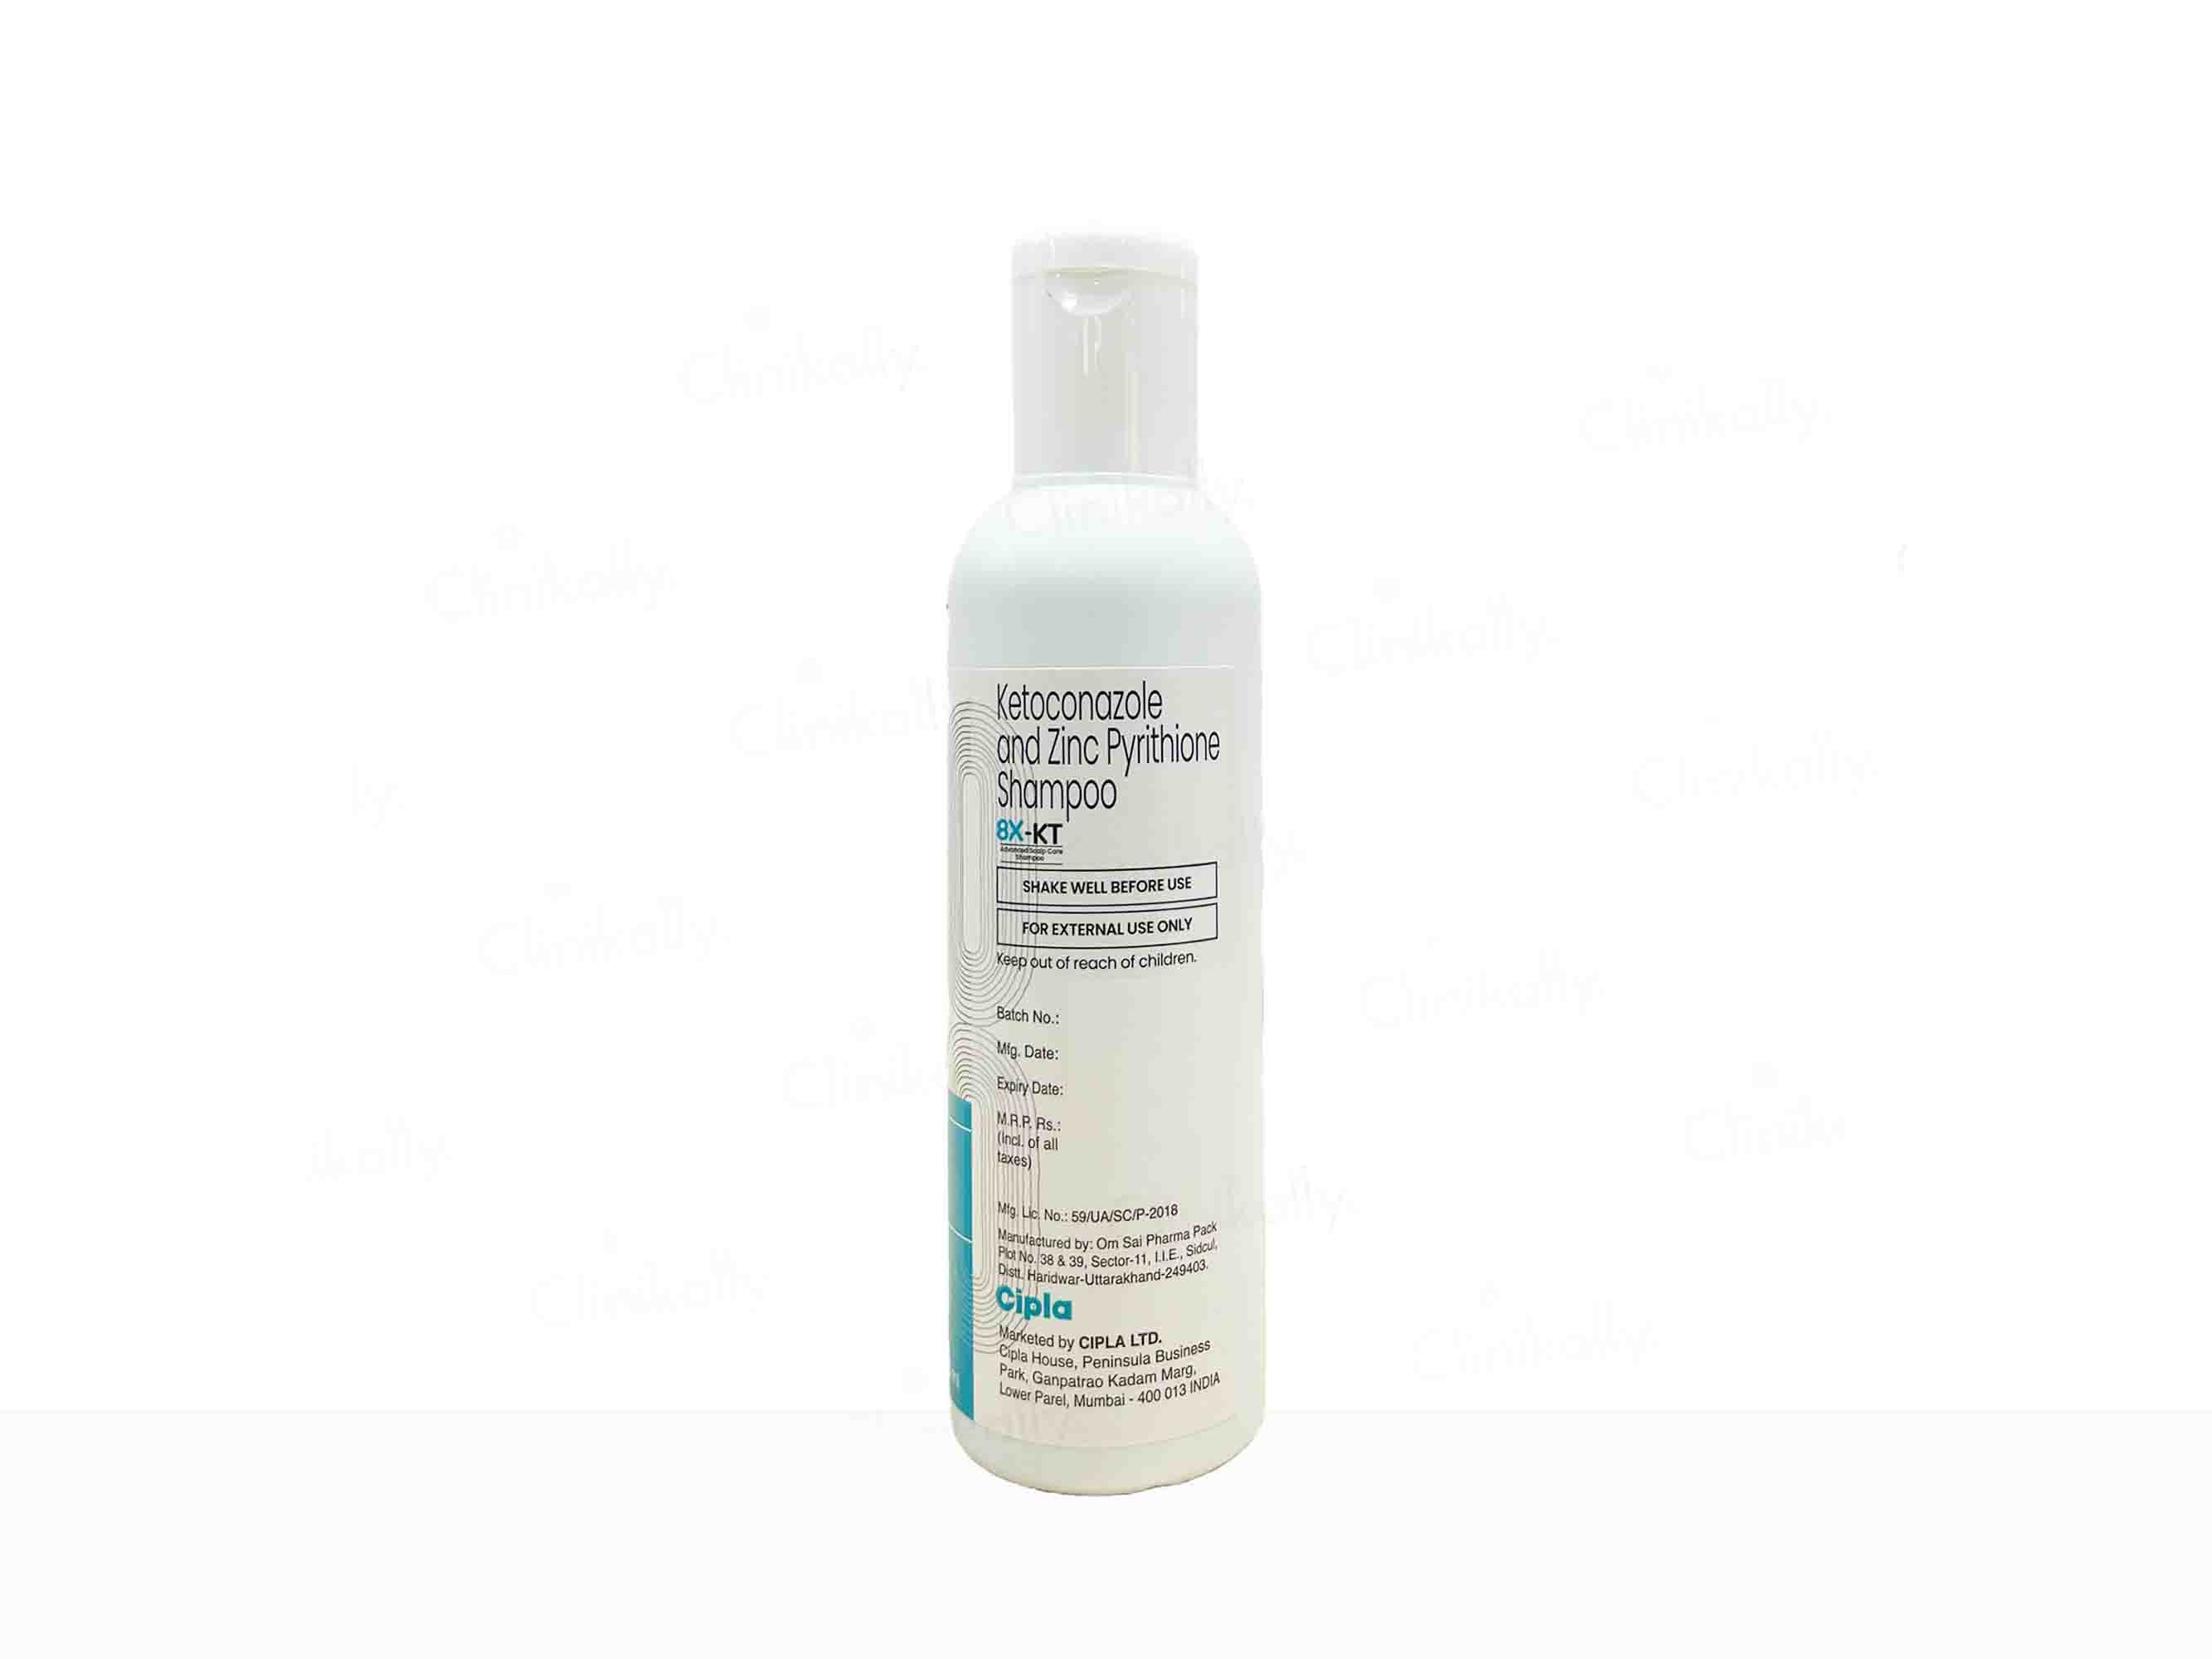 8X-KT Advanced Scalp Care Shampoo - Clinikally